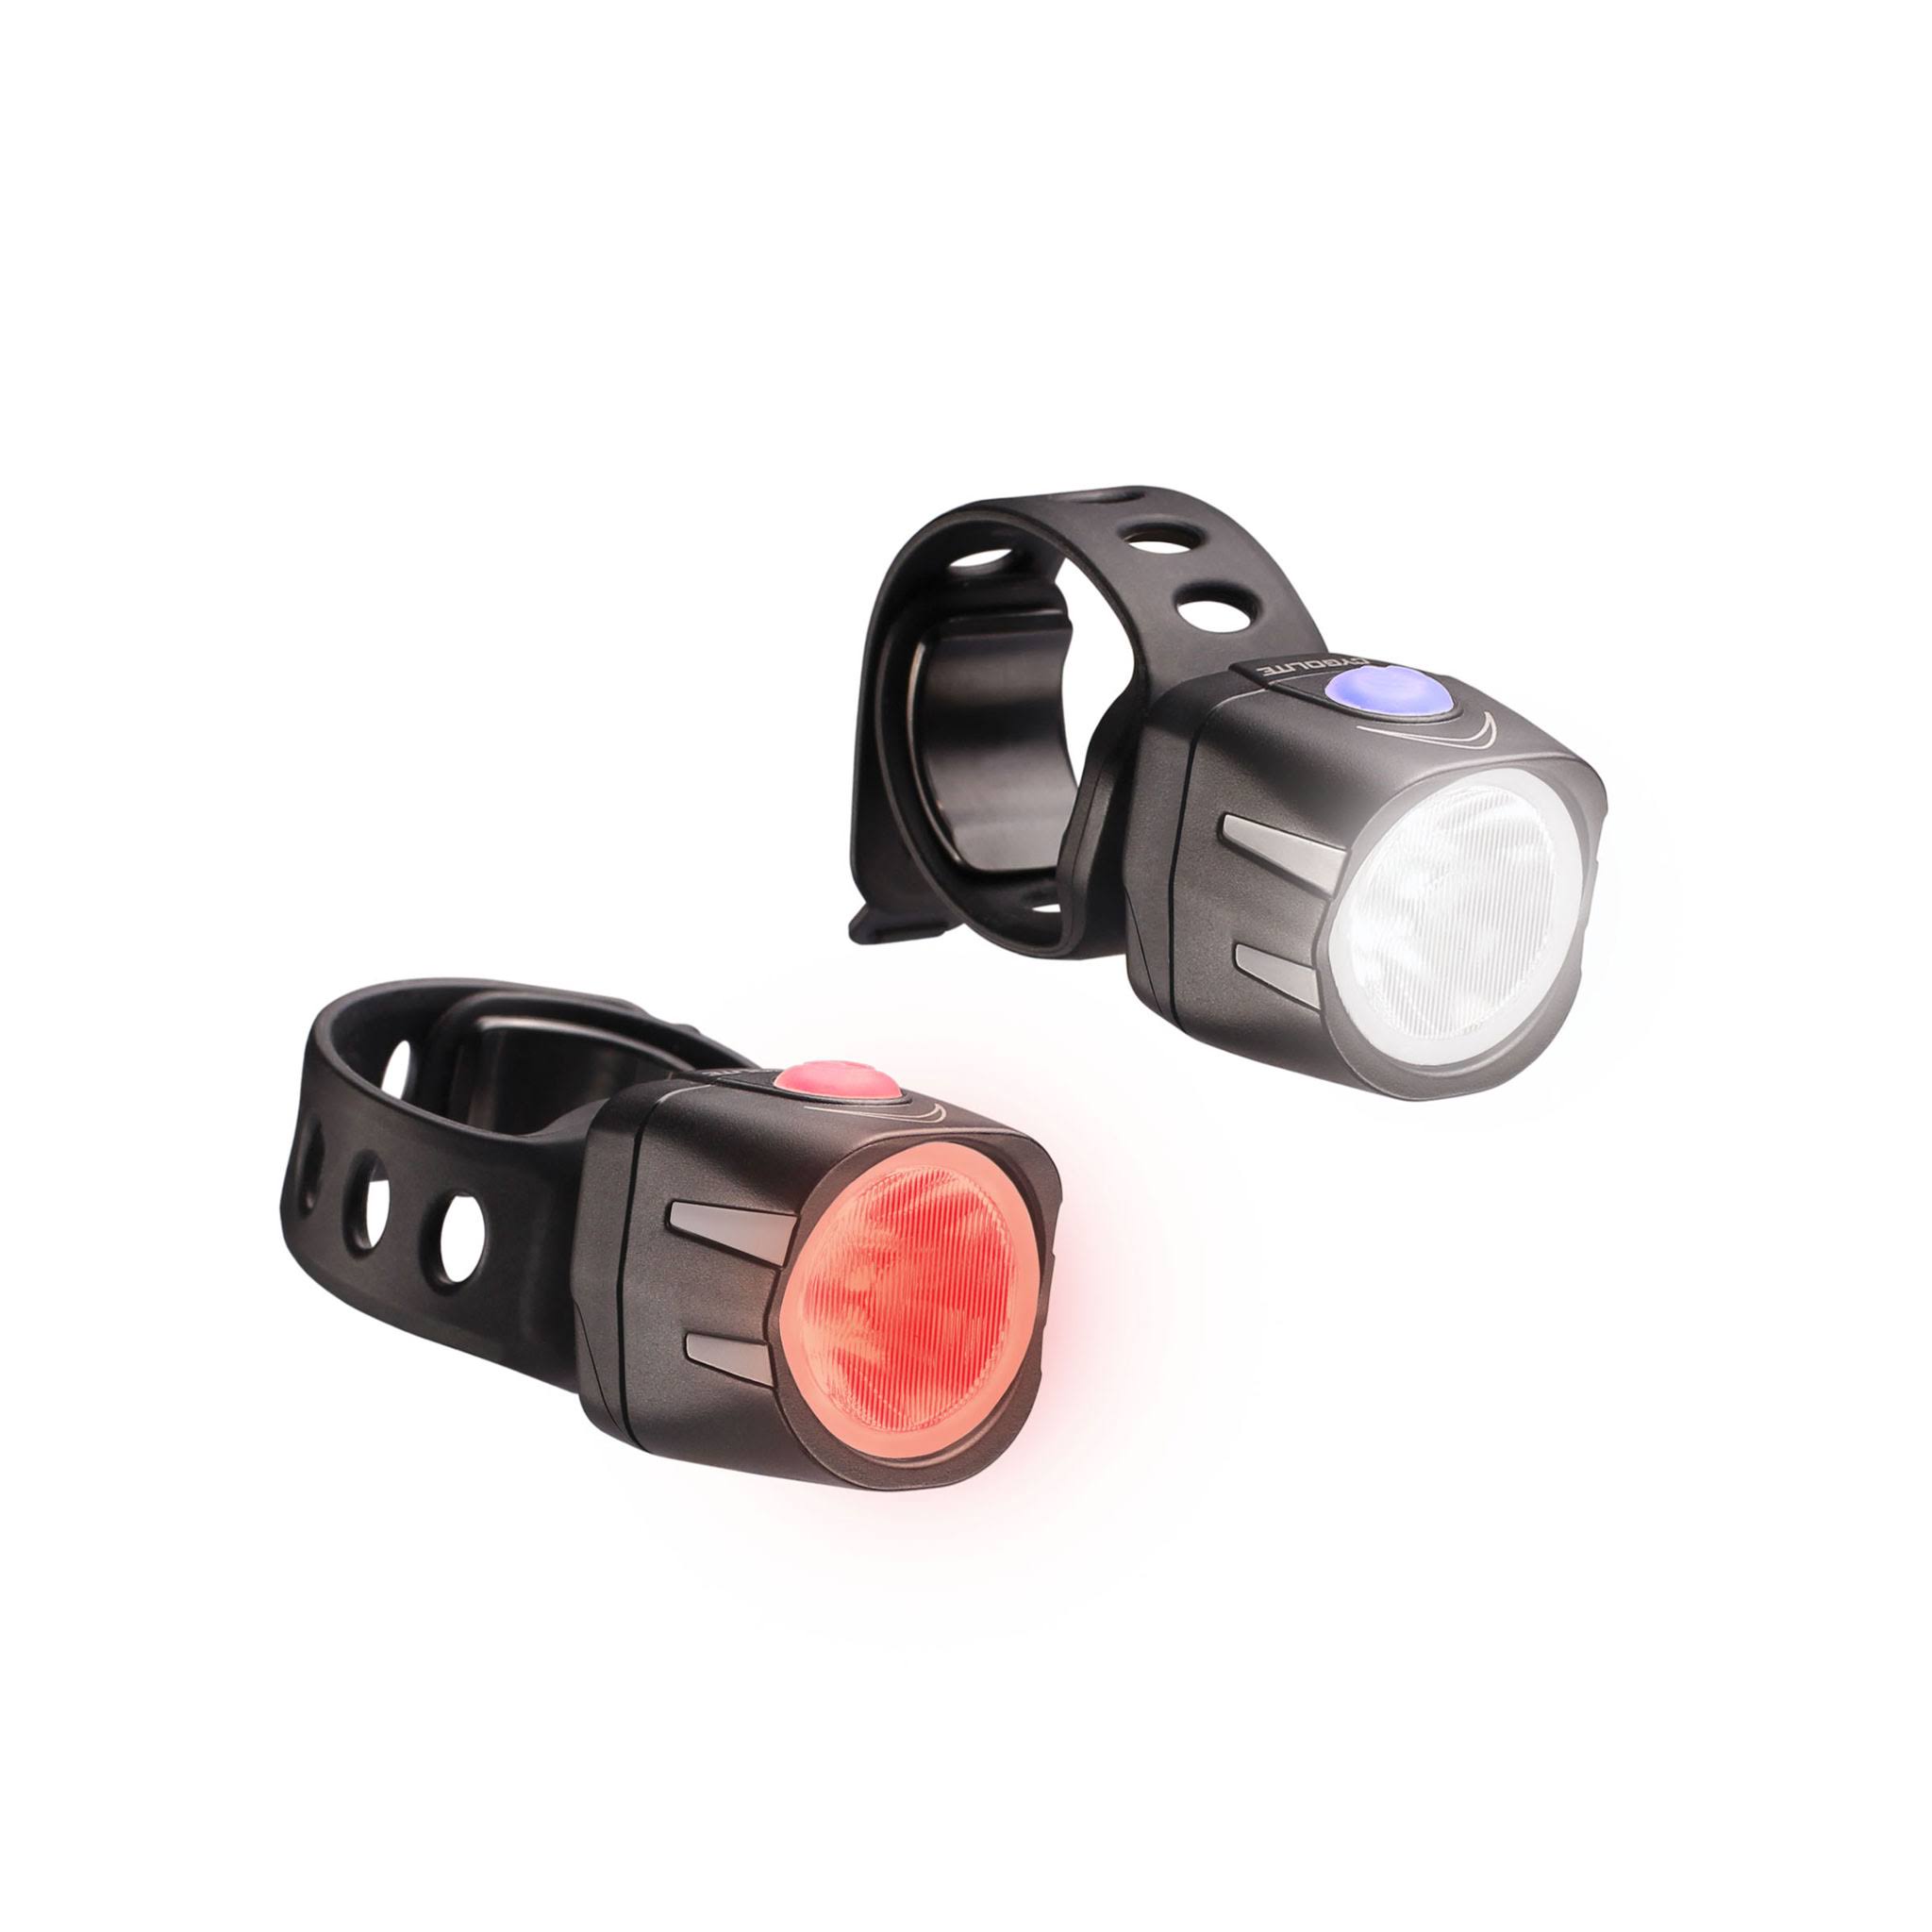 Cygolite Dice Hl Front & Dice Bike Light Set - 150 Lumens